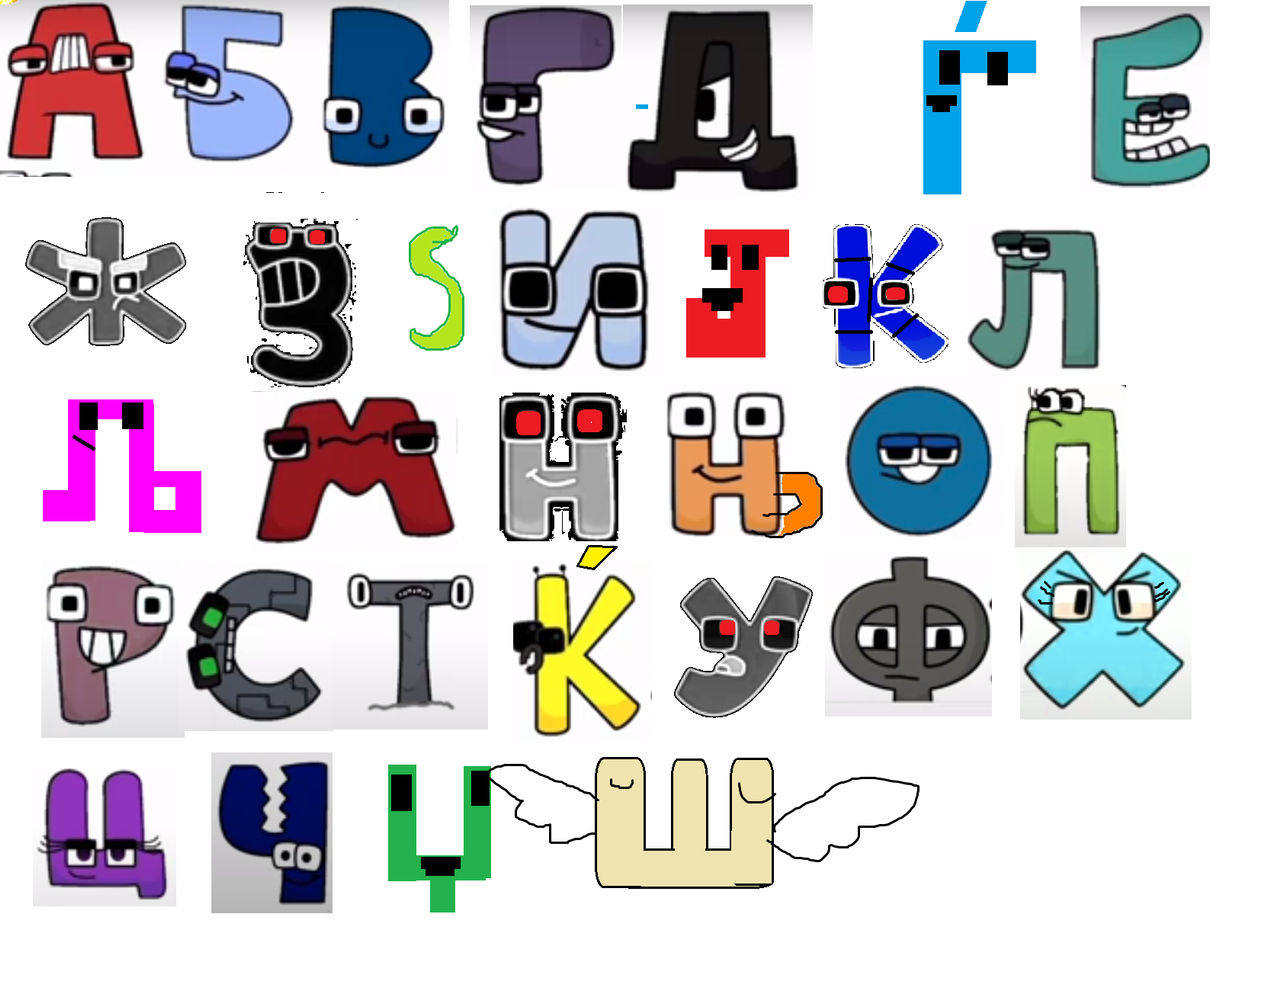 Alphabet lore Russian exe by Eggrgfrvfr on DeviantArt